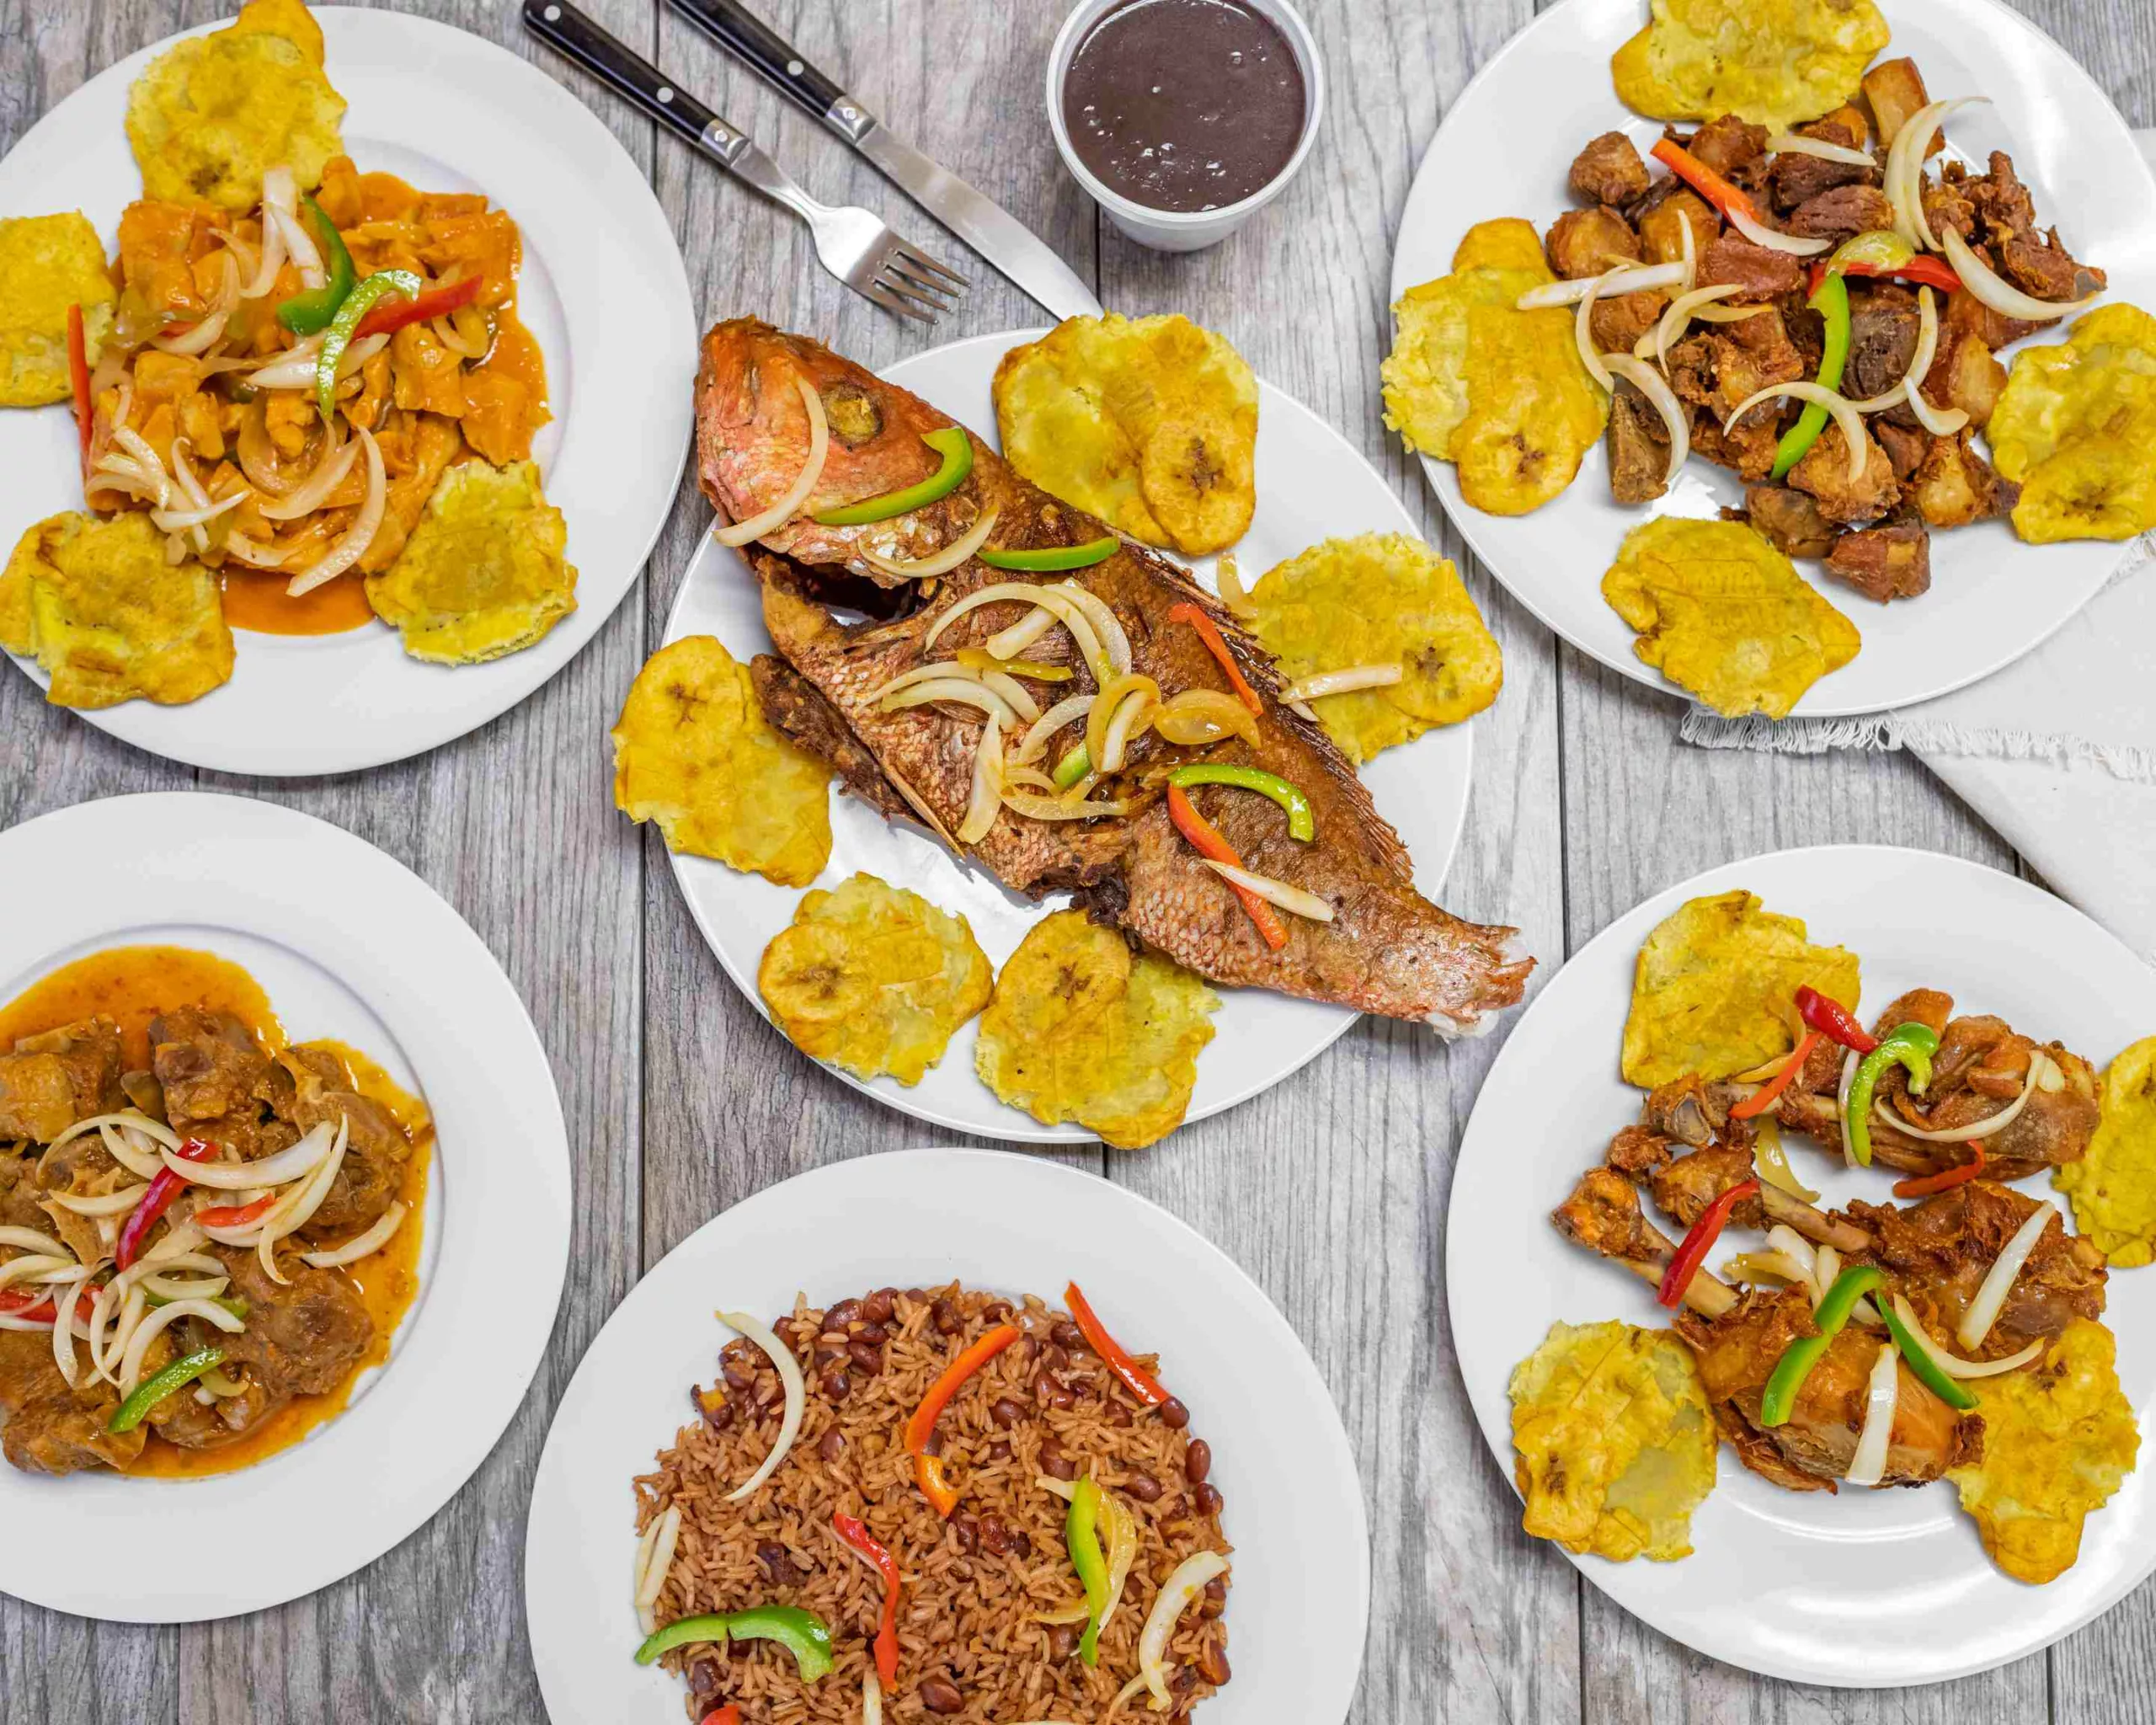 Haiti's culinary diversity